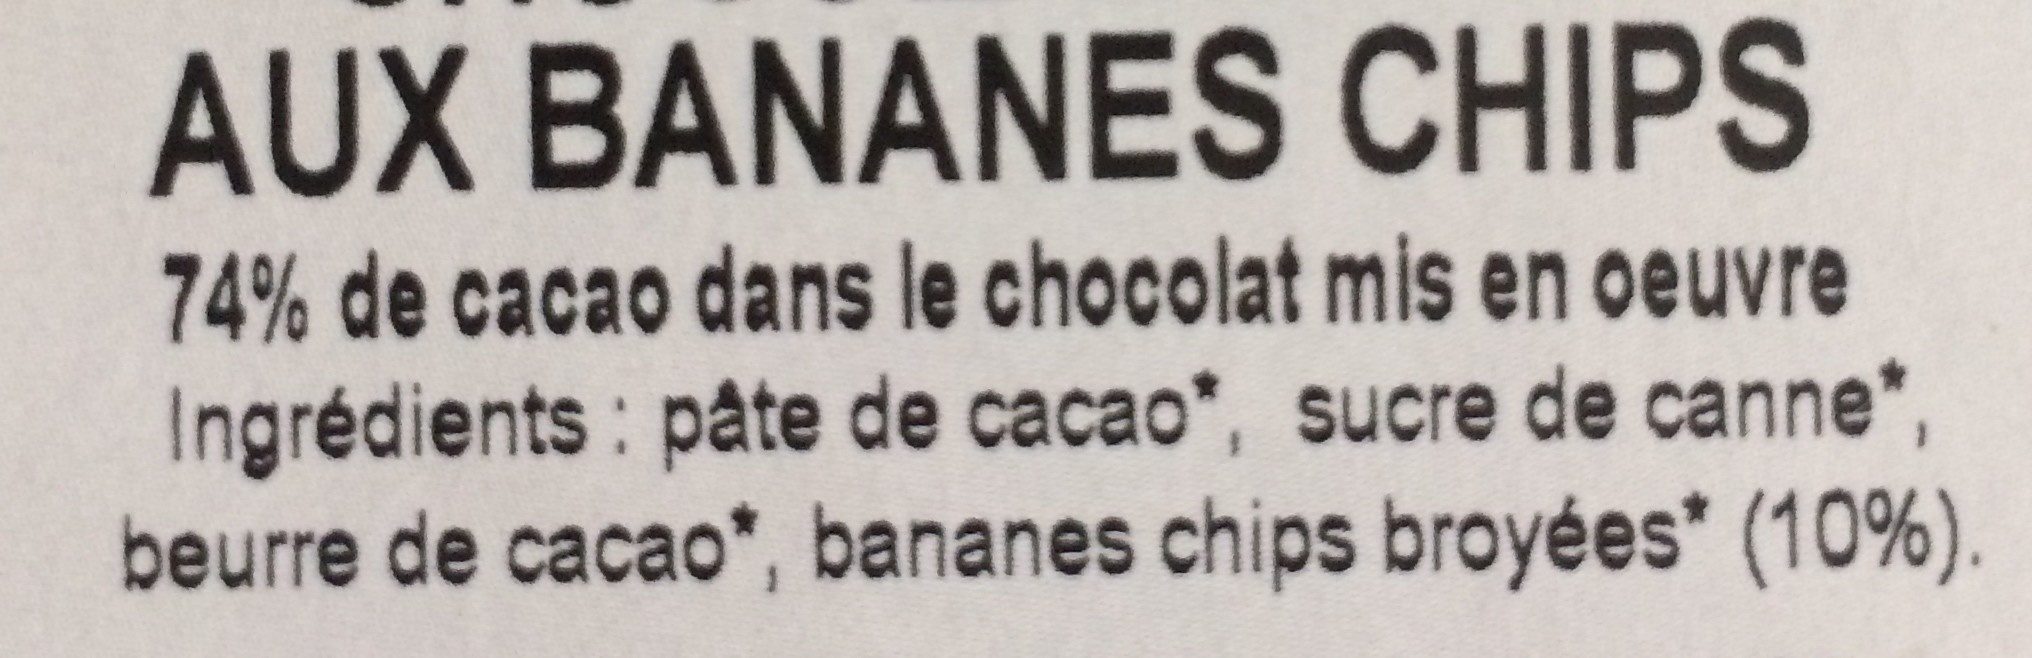 Chocolat noir aux bananes chips - Ingredients - fr